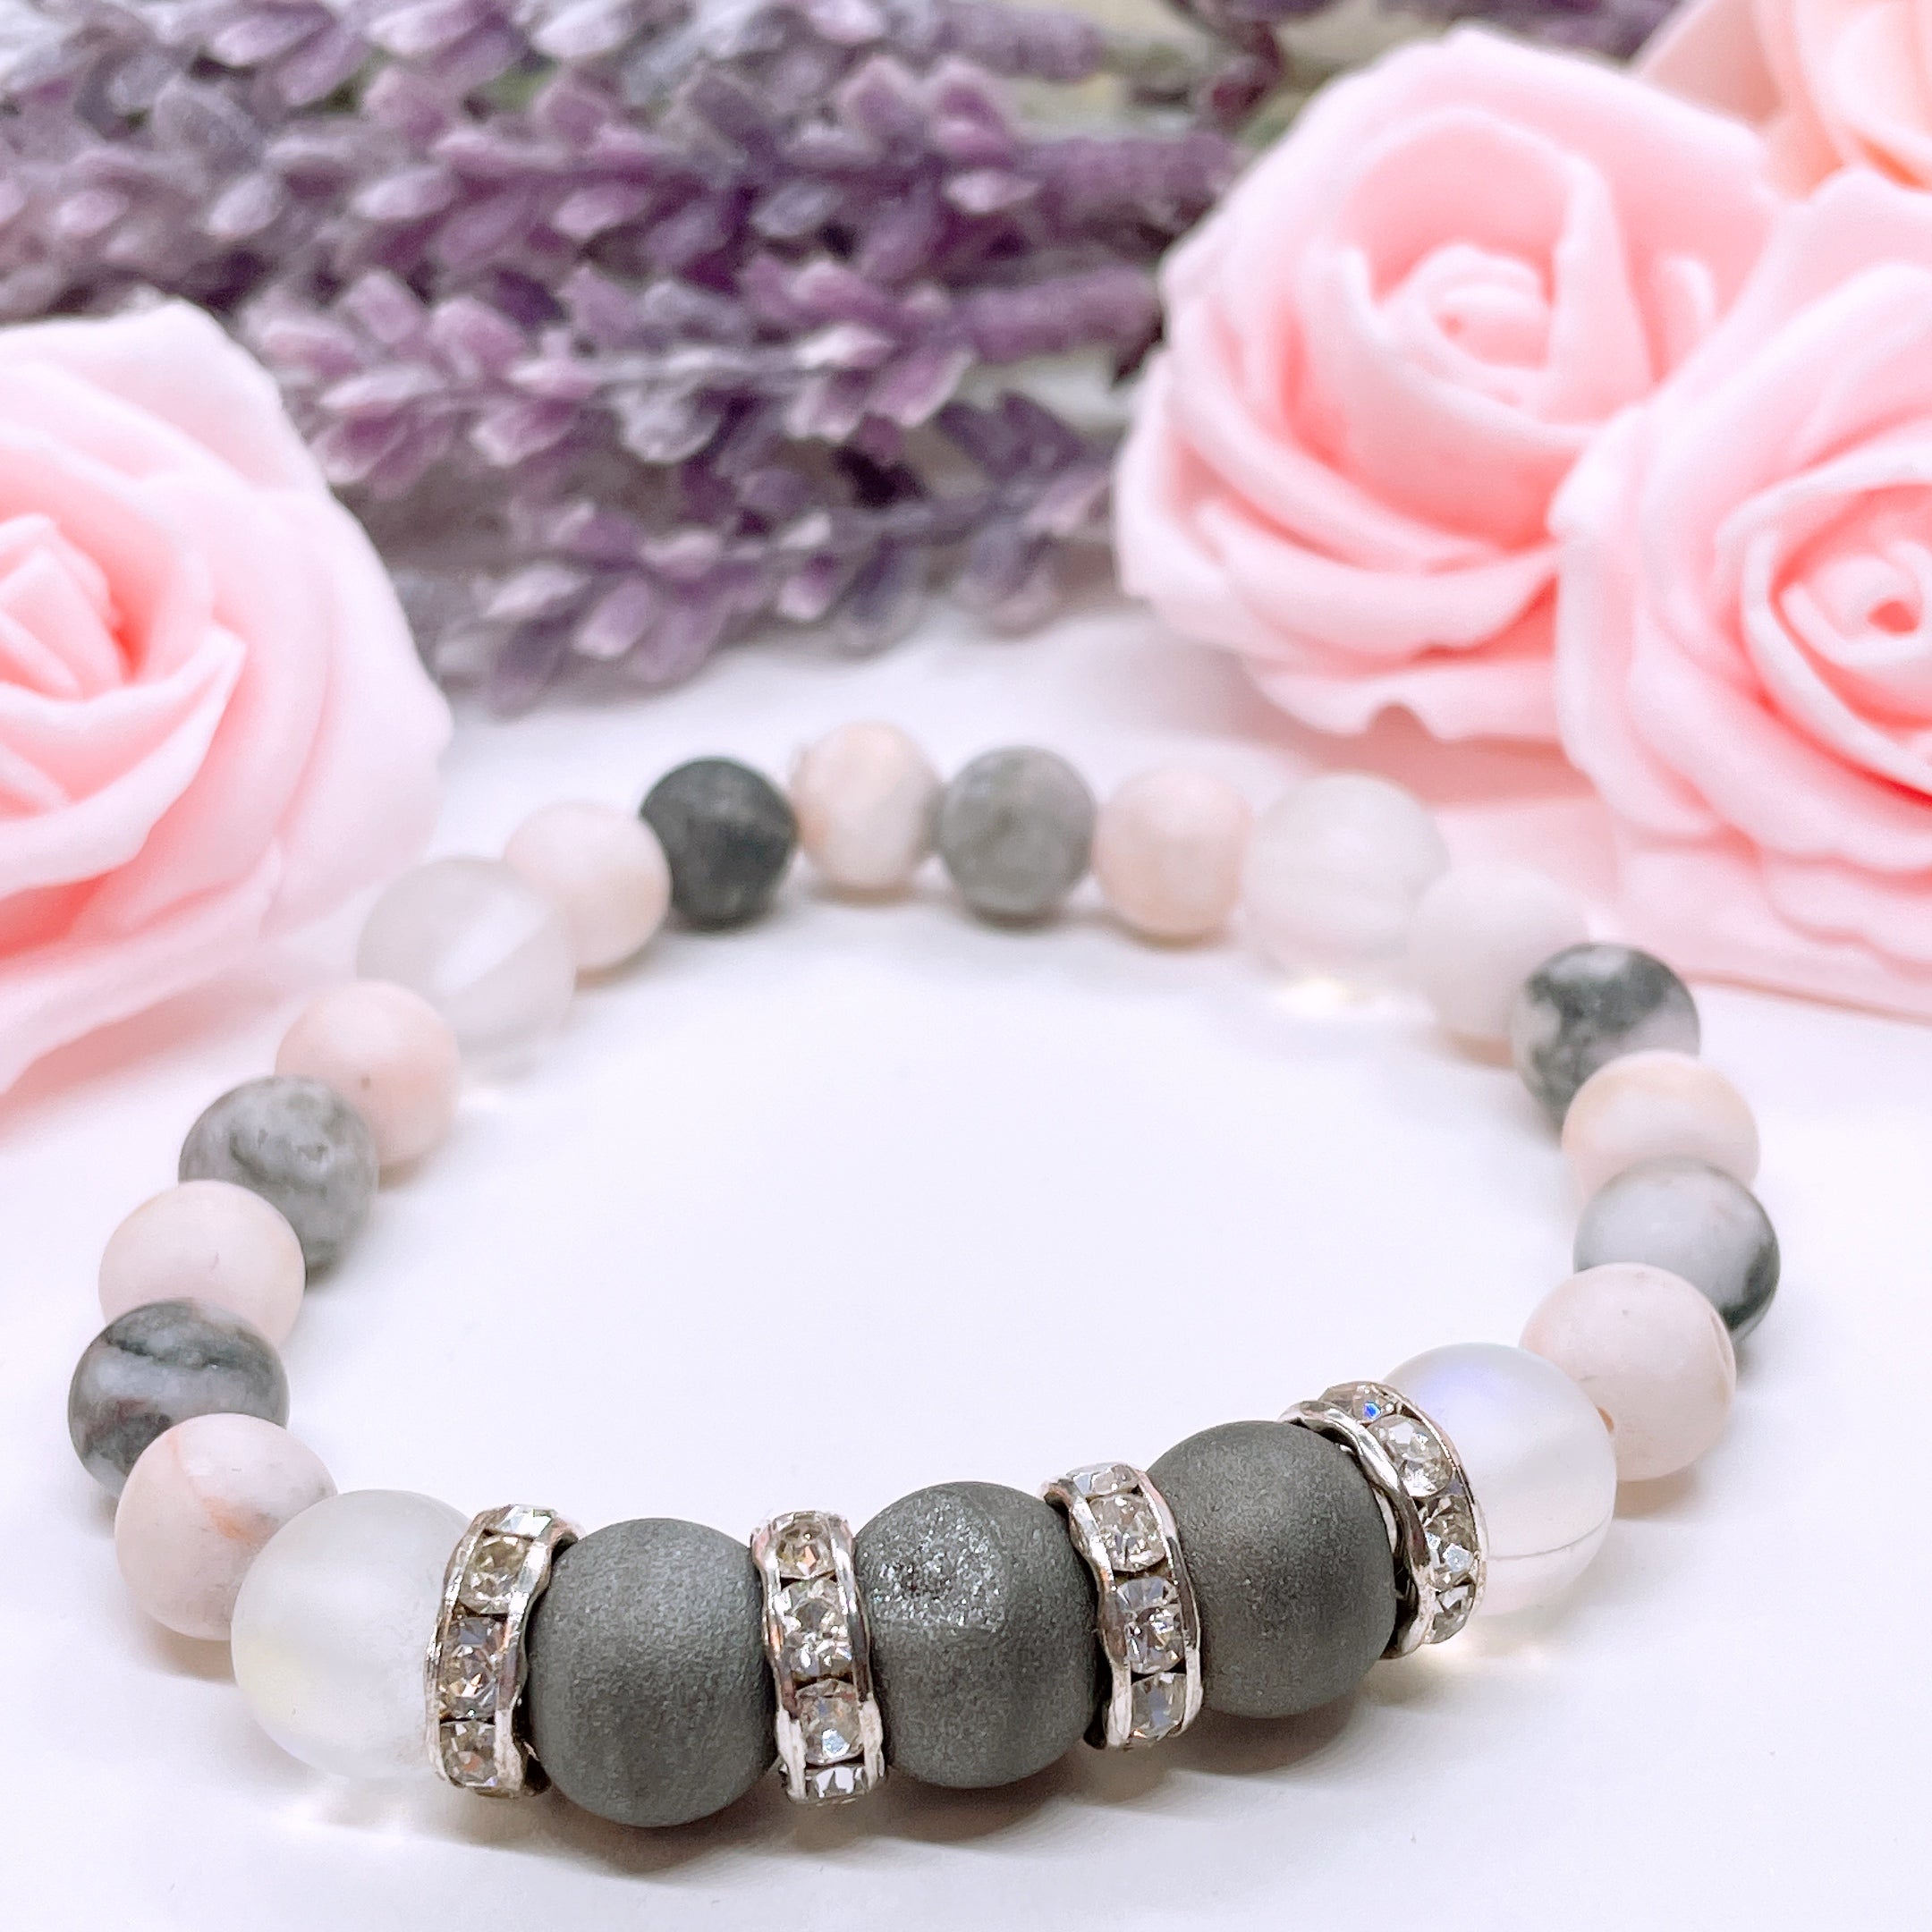 A Druzy Rhinestone stretch bracelet made with 3 dark rough druzy gemstones, translucent aura beads, pink zebra jasper gemstones, and rhinestone accents for added sparkle sits on a white table. 